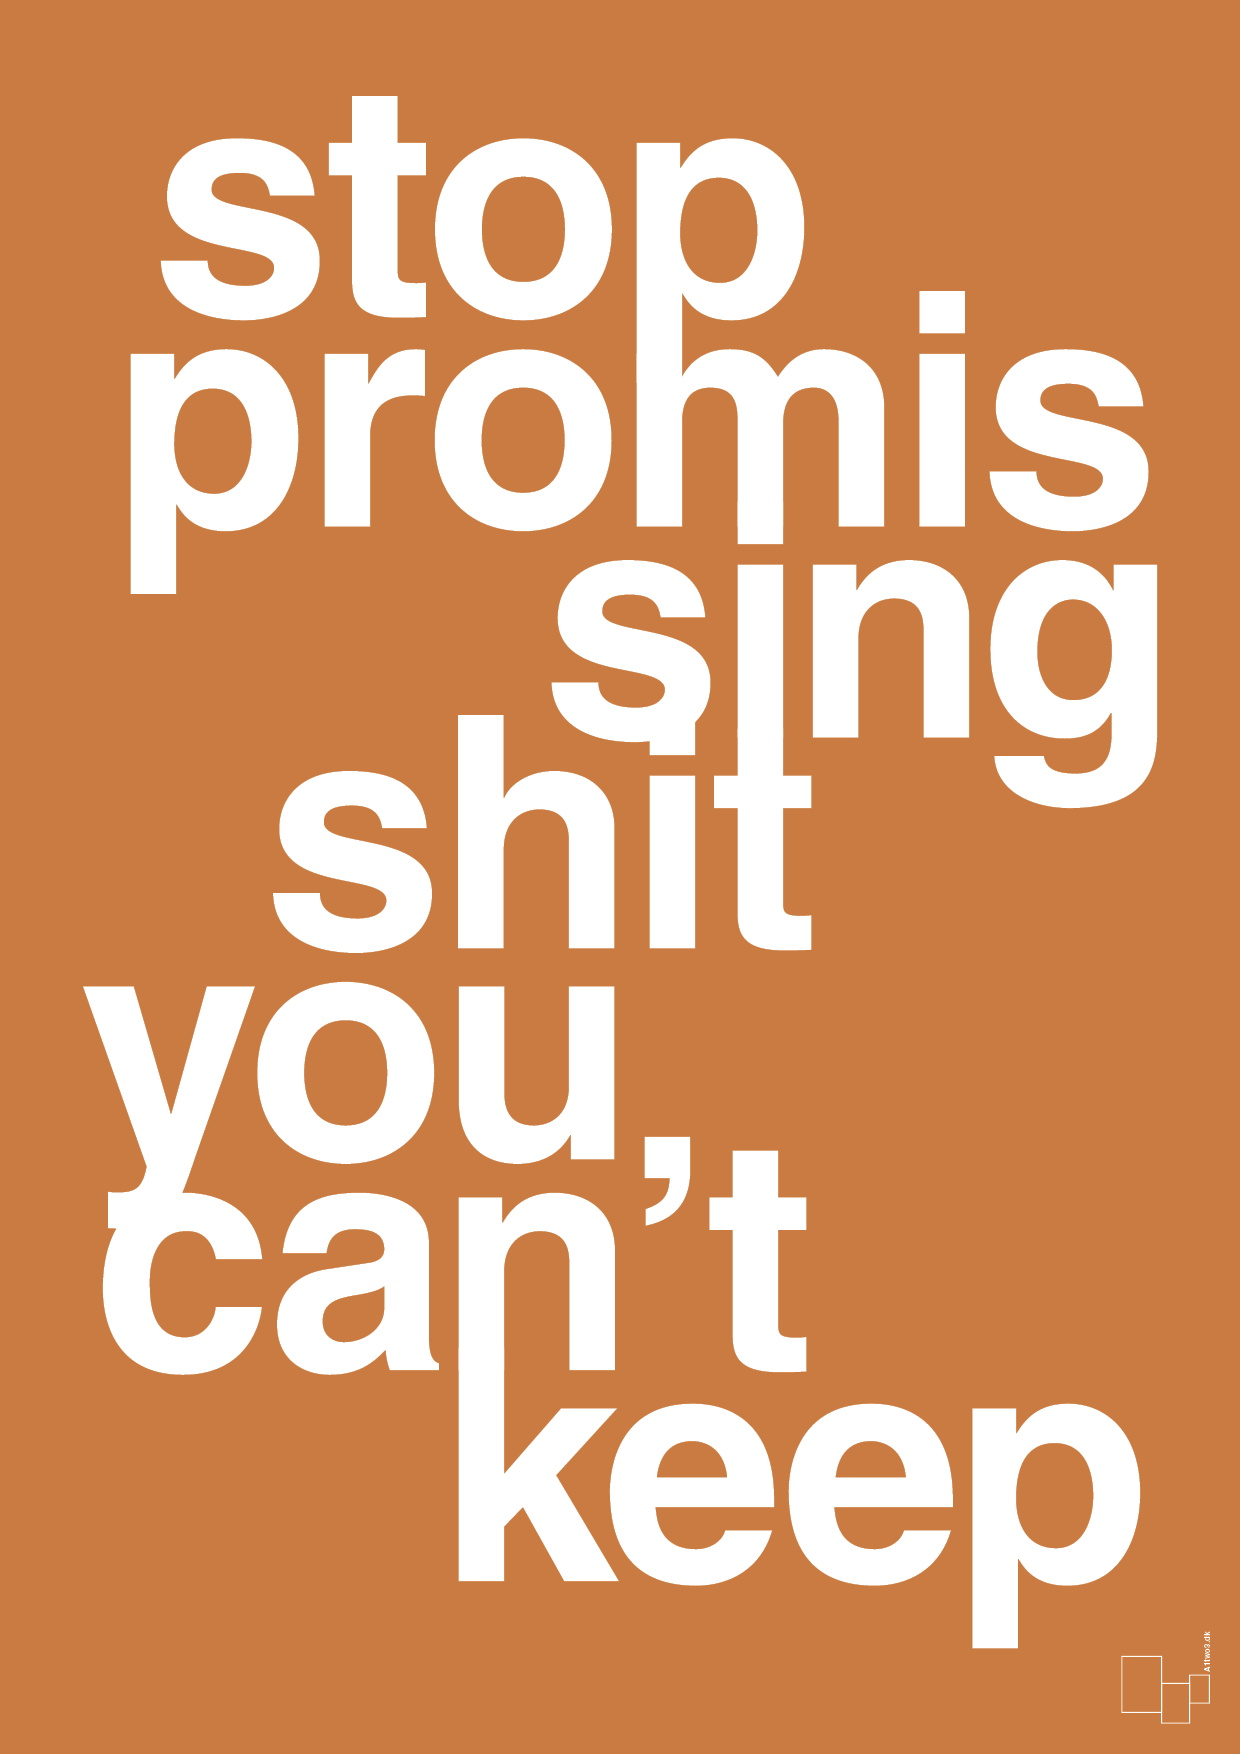 stop promissing shit you cant keep - Plakat med Ordsprog i Rumba Orange